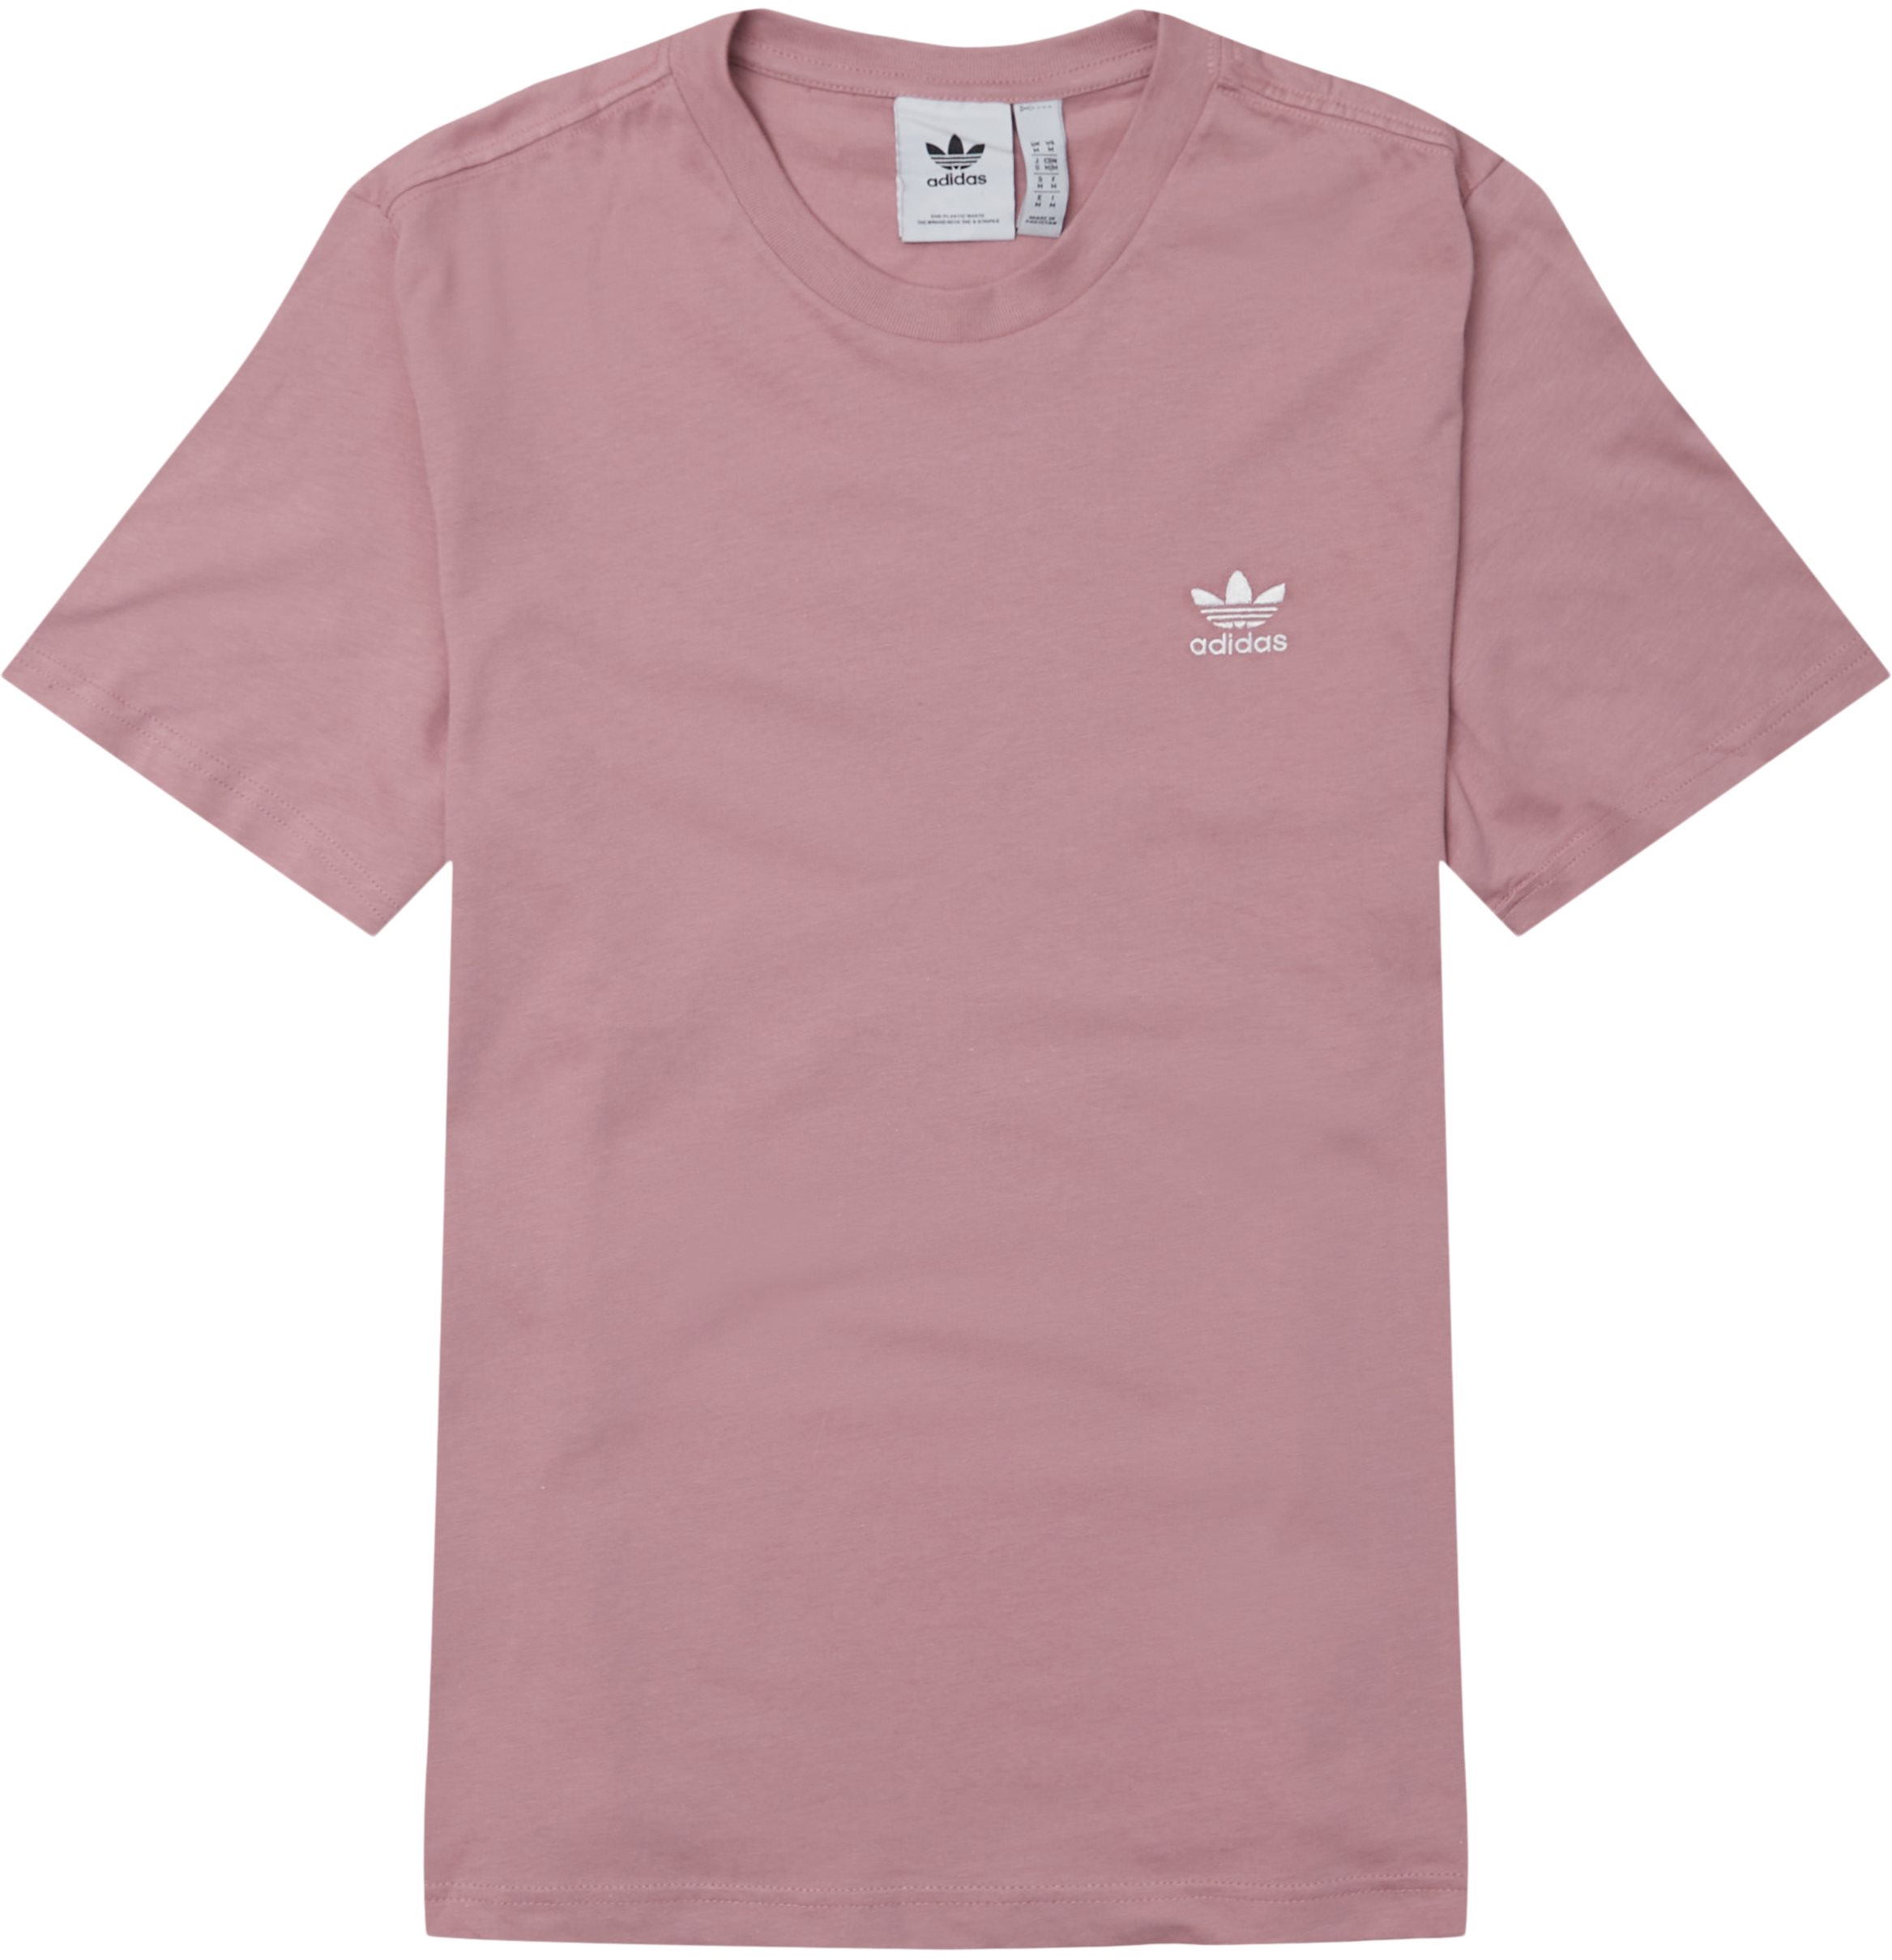 Essential Tee  - T-shirts - Regular fit - Rosa